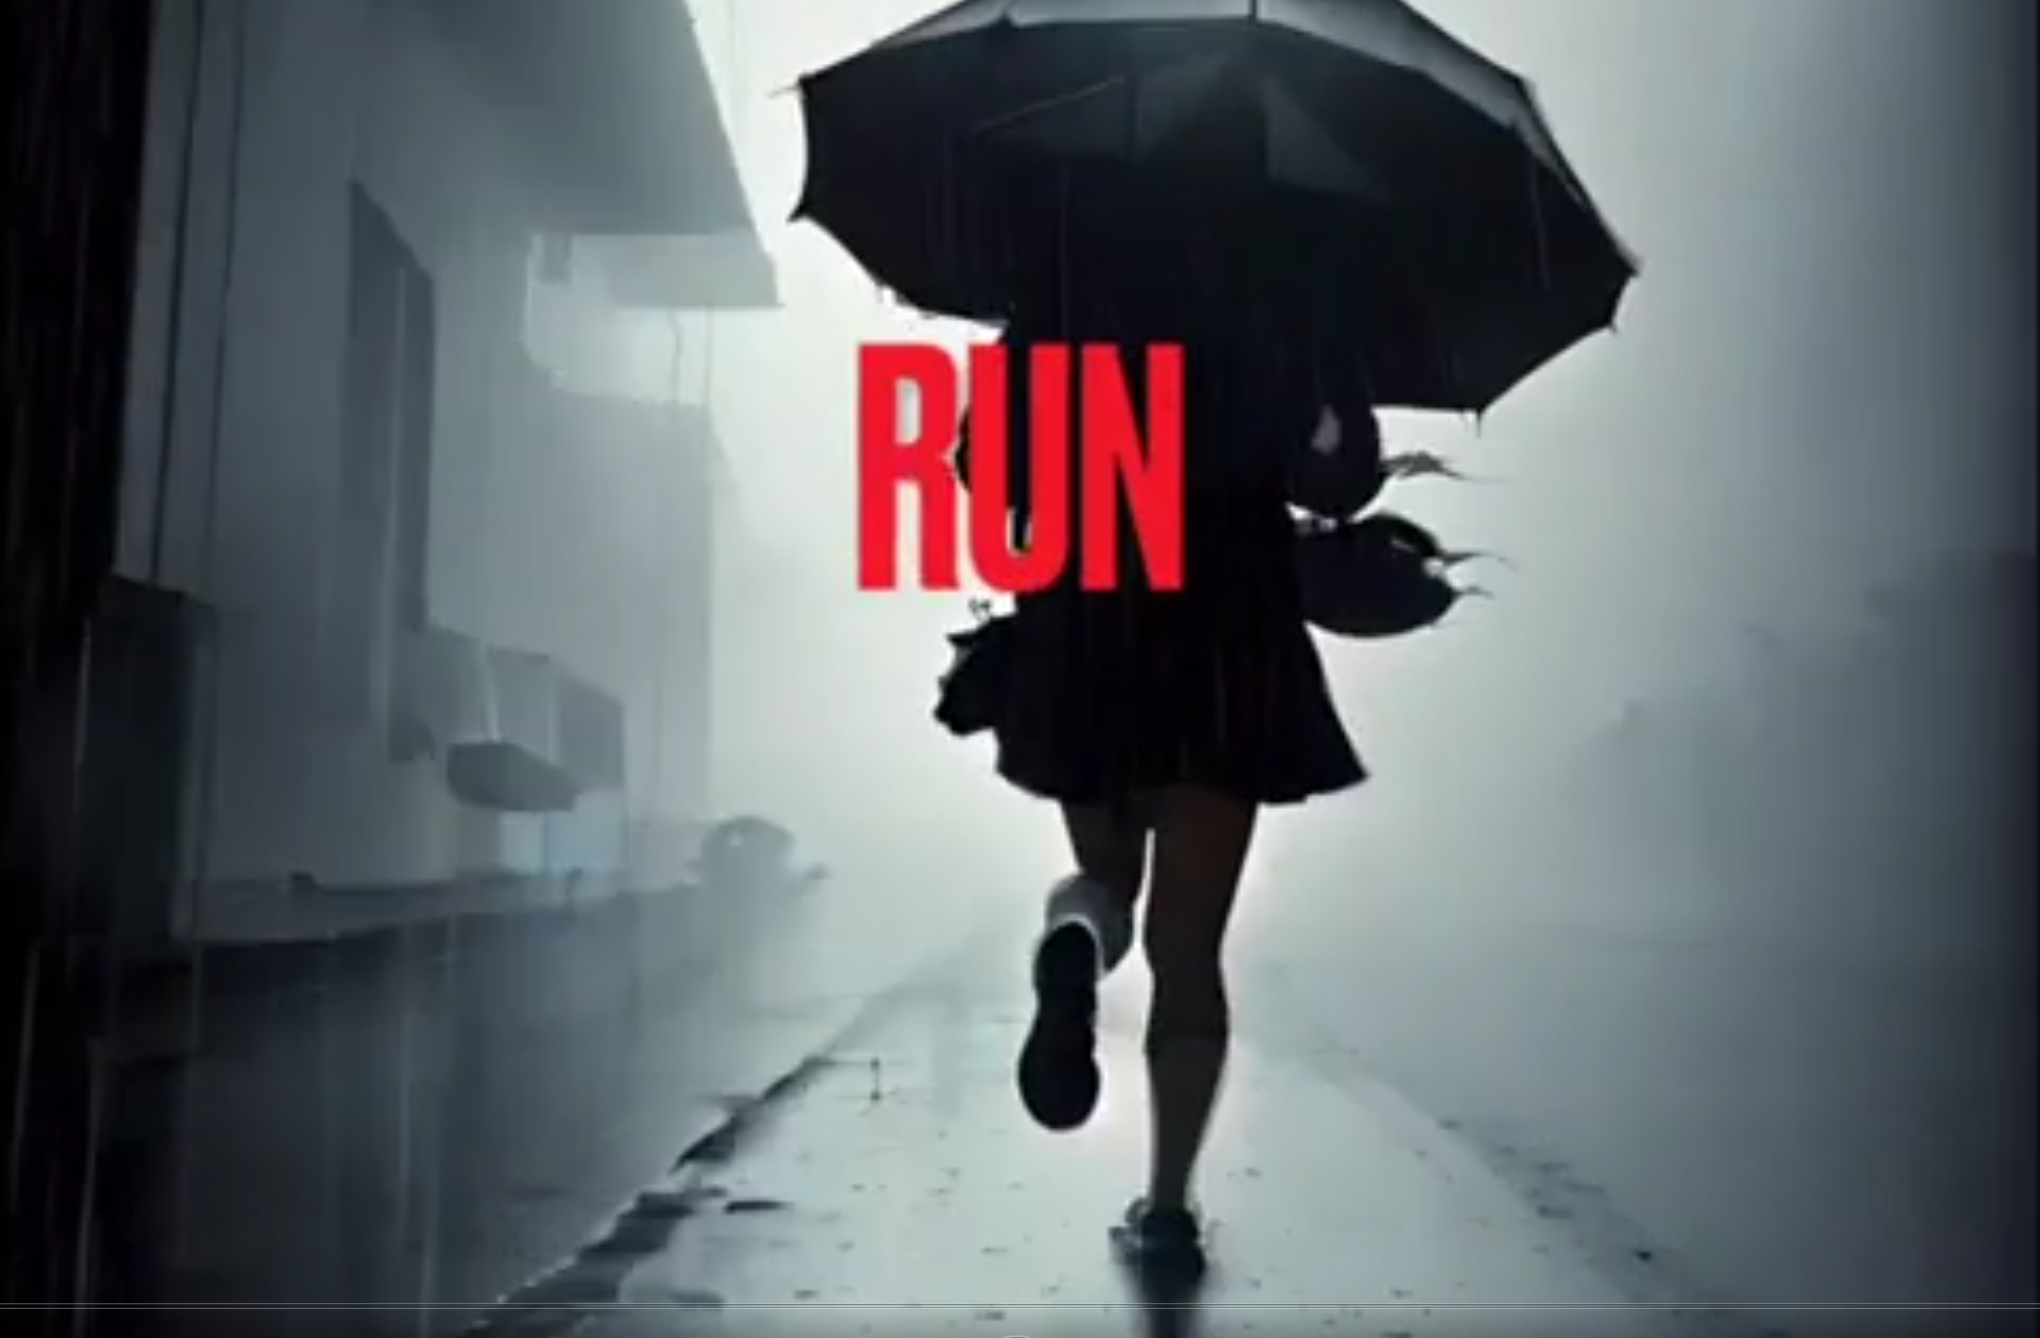 Run: A Short Horror Film